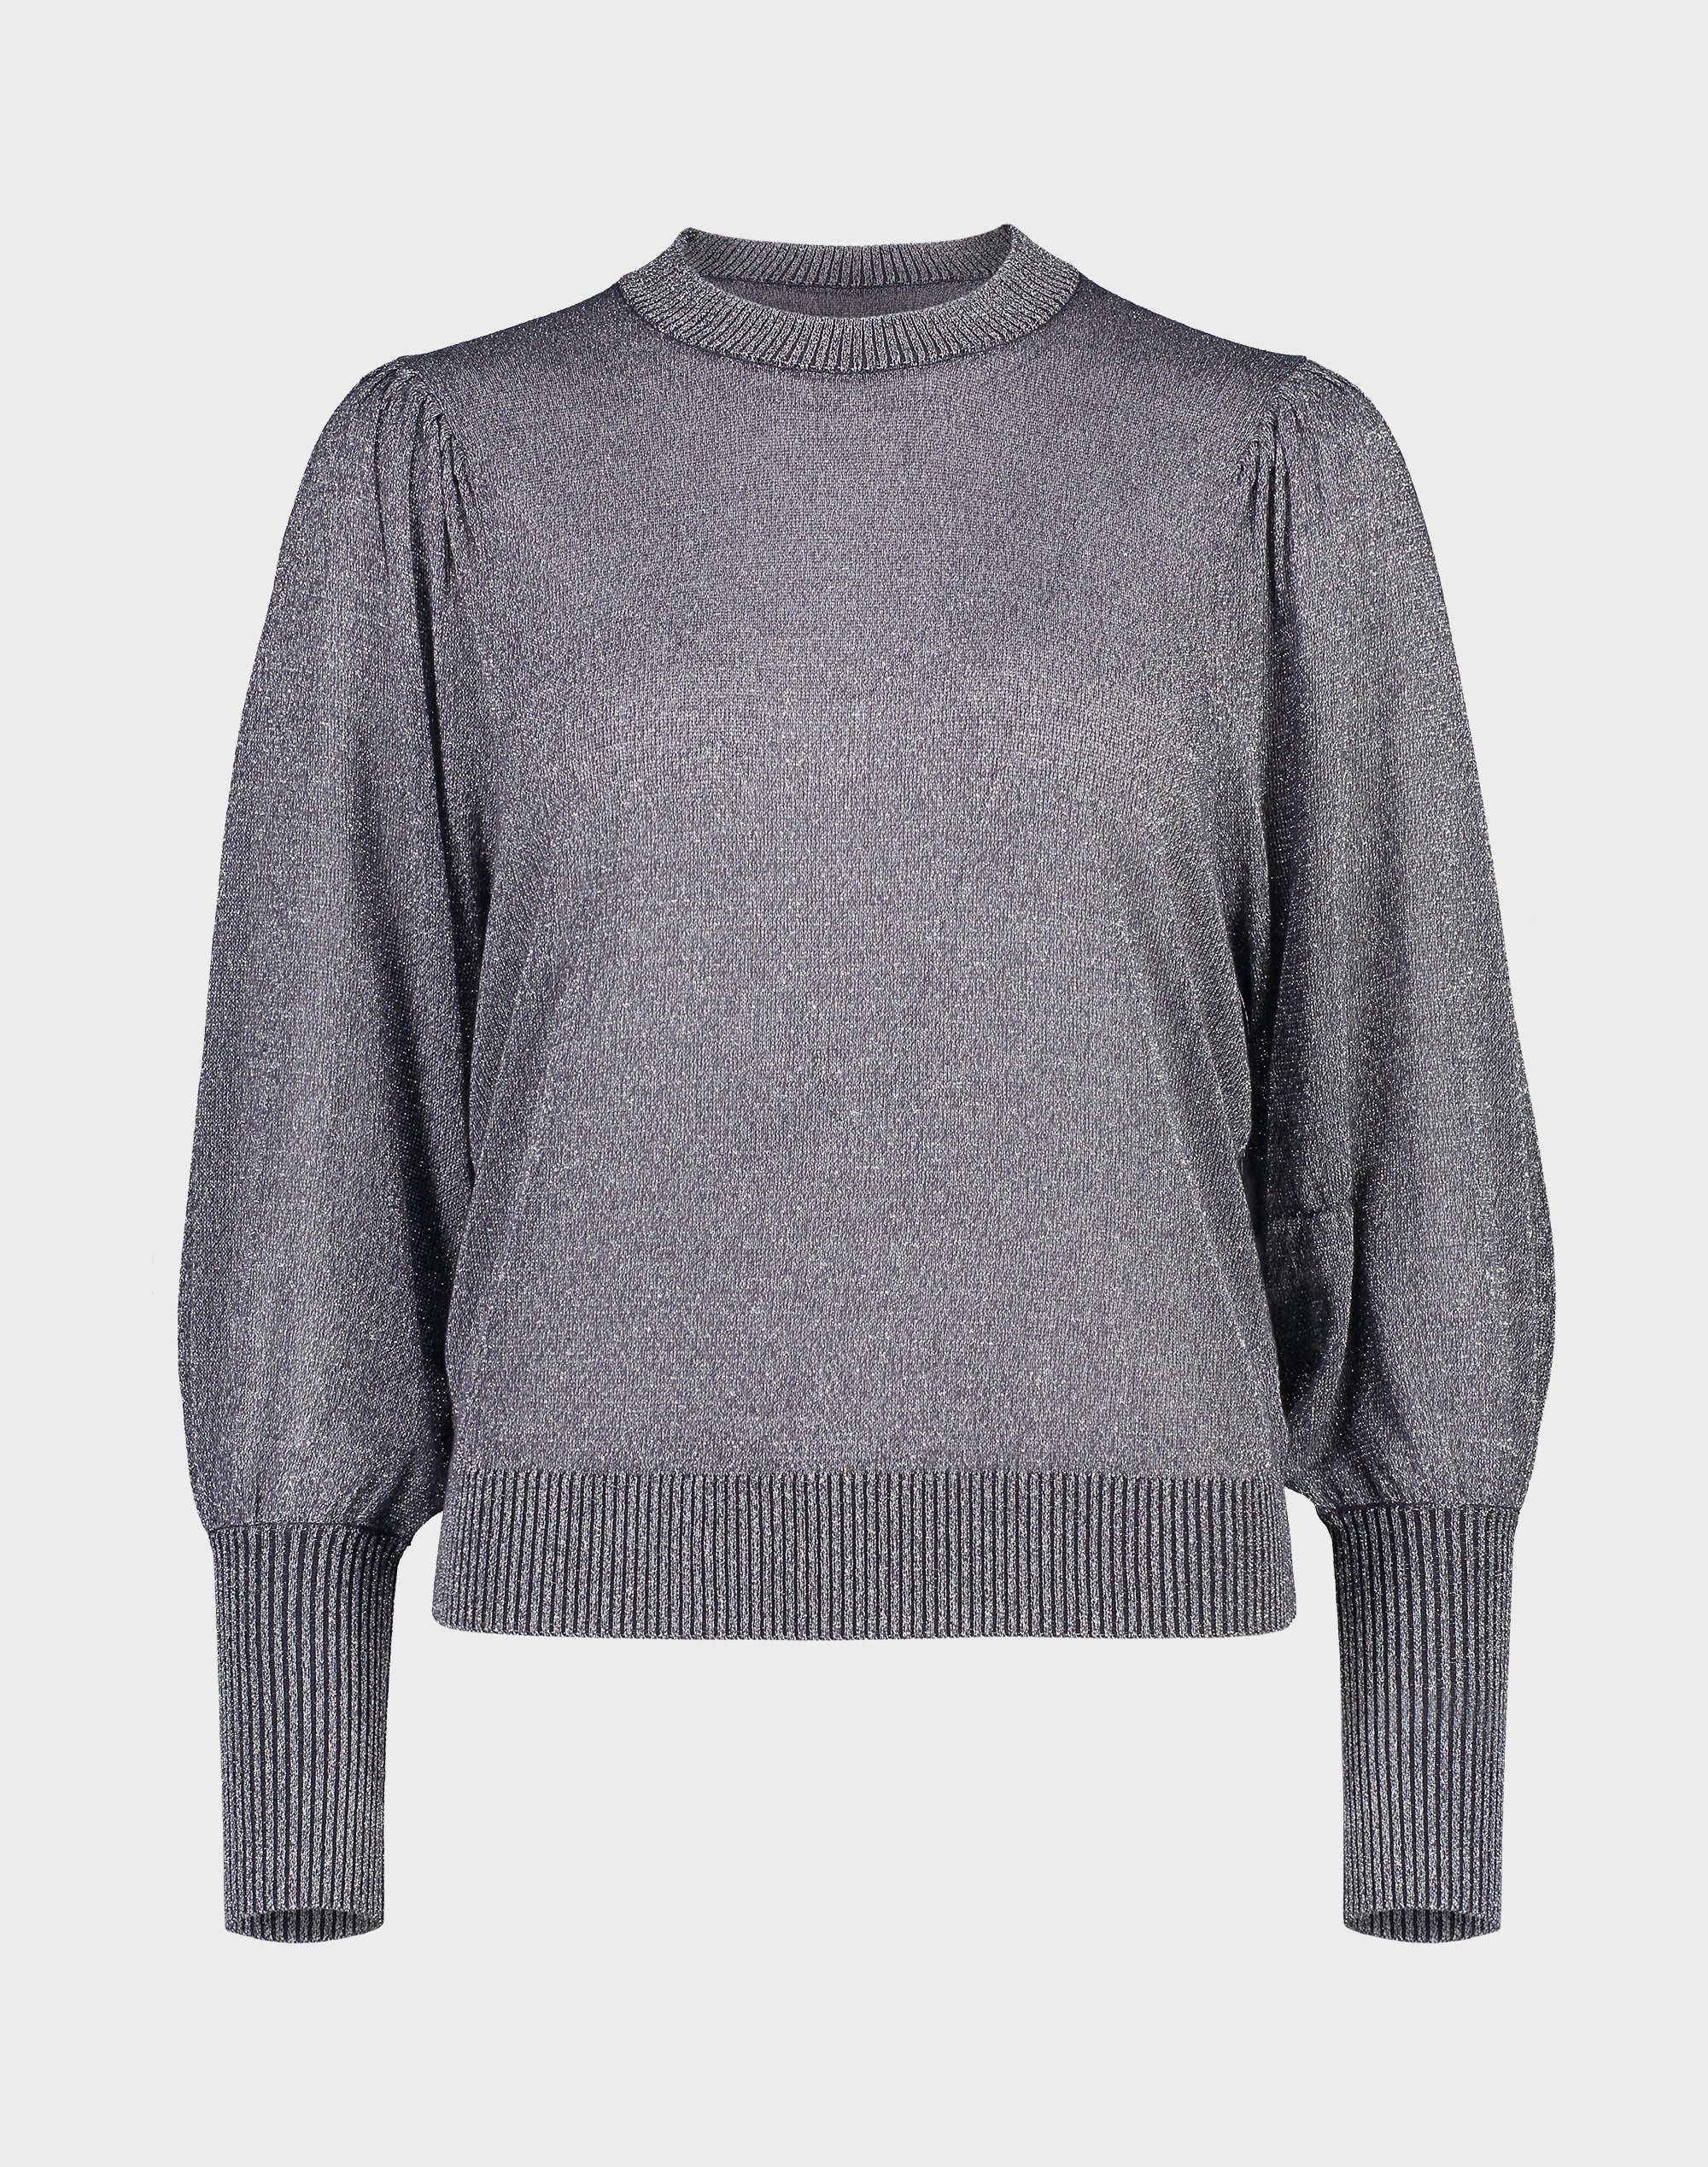 Bec Lurex Sweater